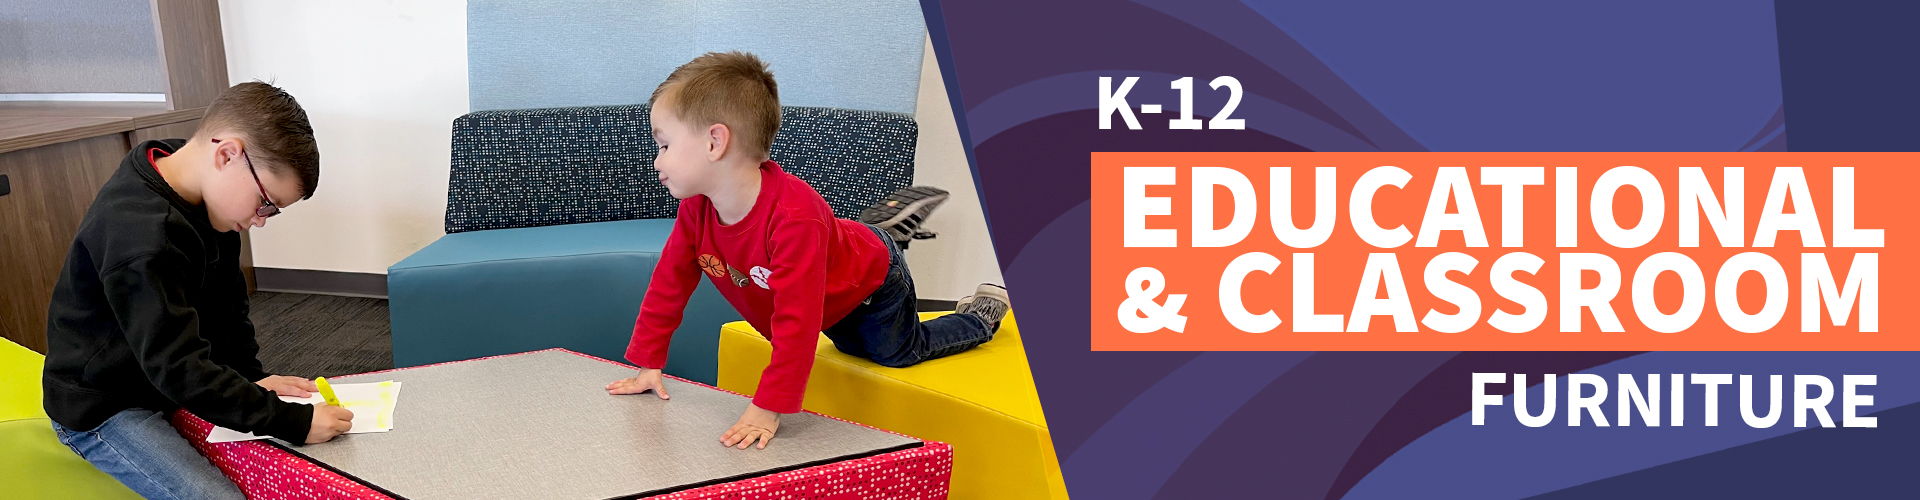 K-12 Educational & Classroom Furniture